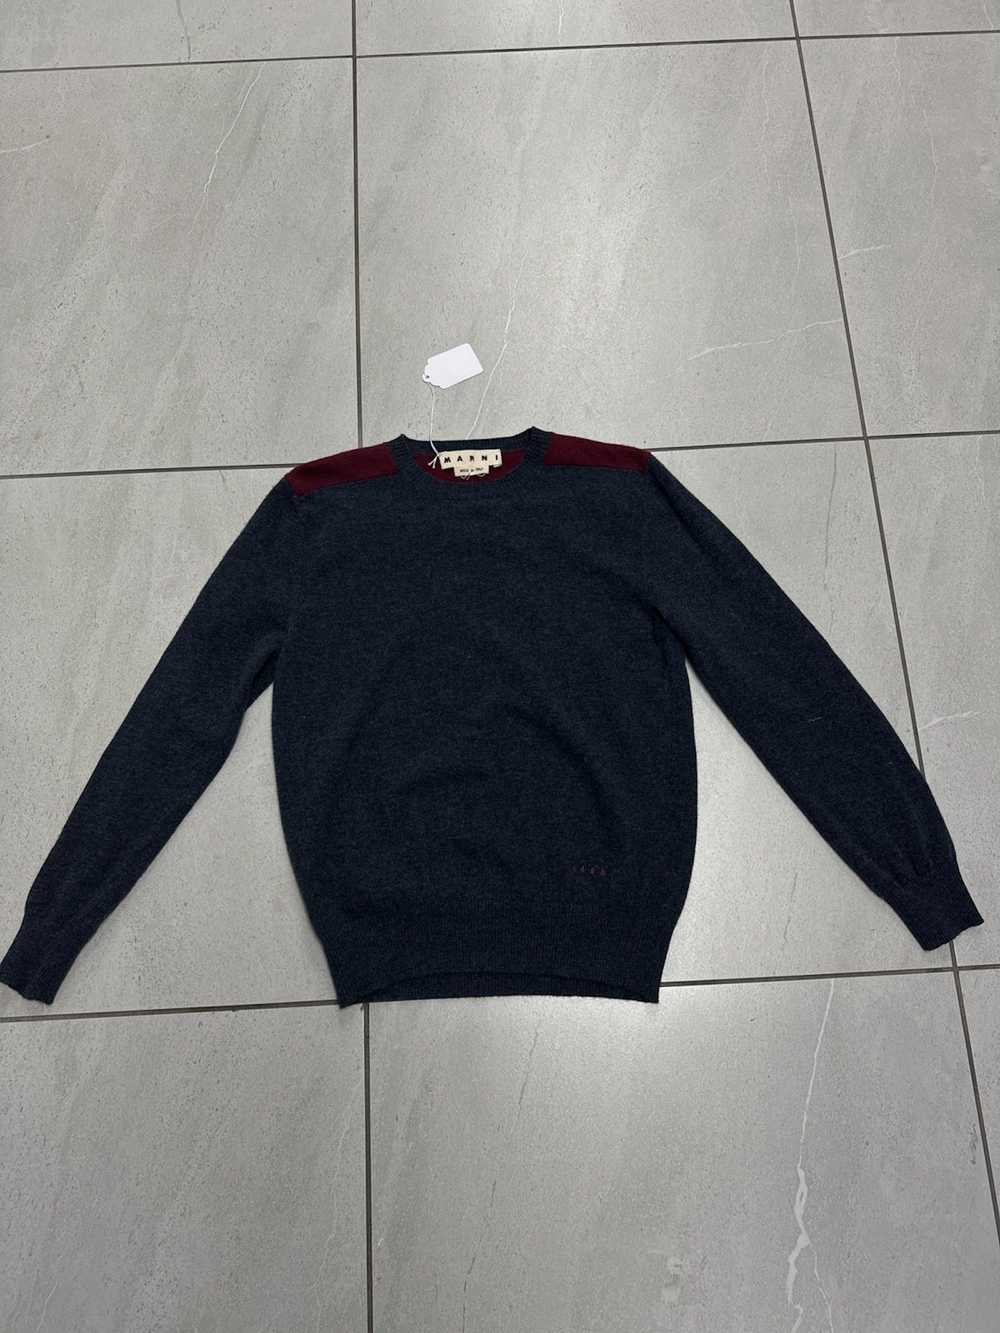 Marni Marni sweater - image 1